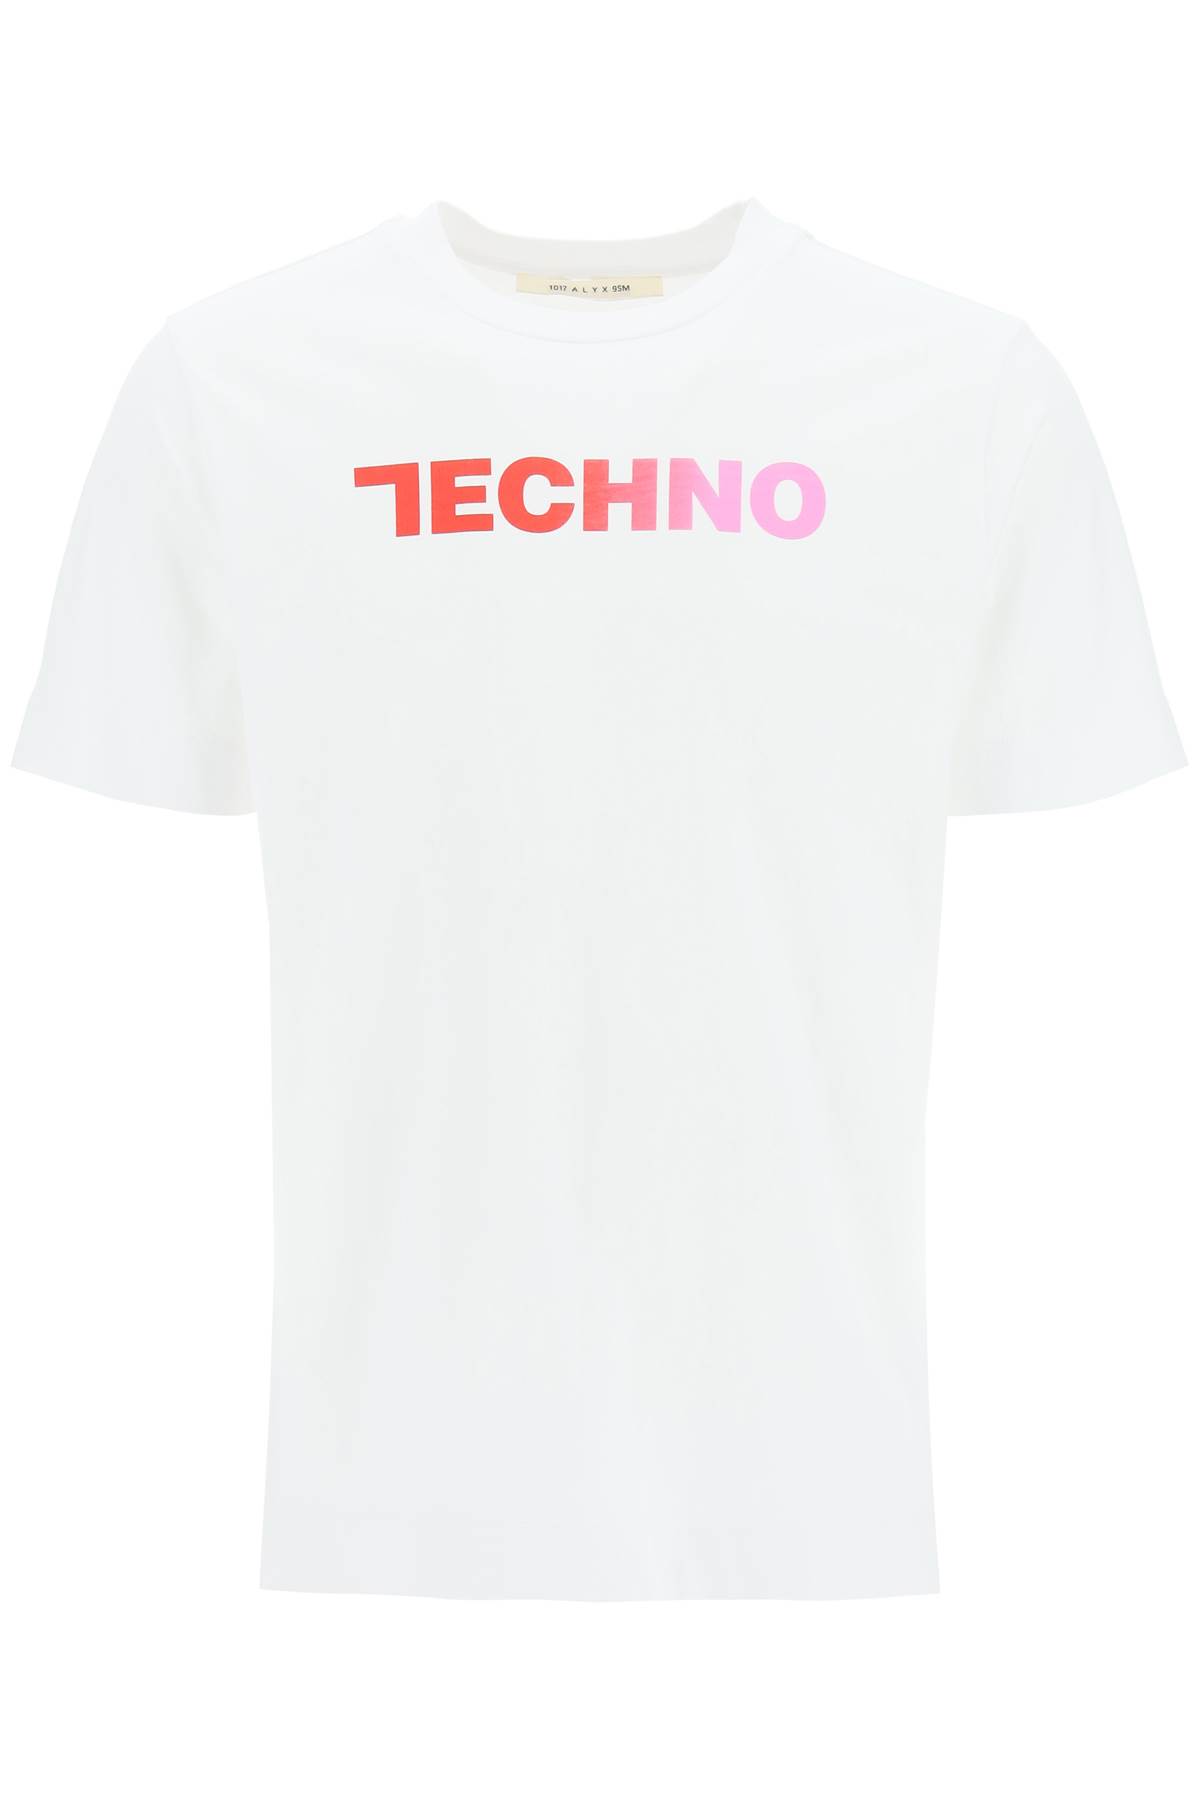 1017 ALYX 9SM Techno T-shirt